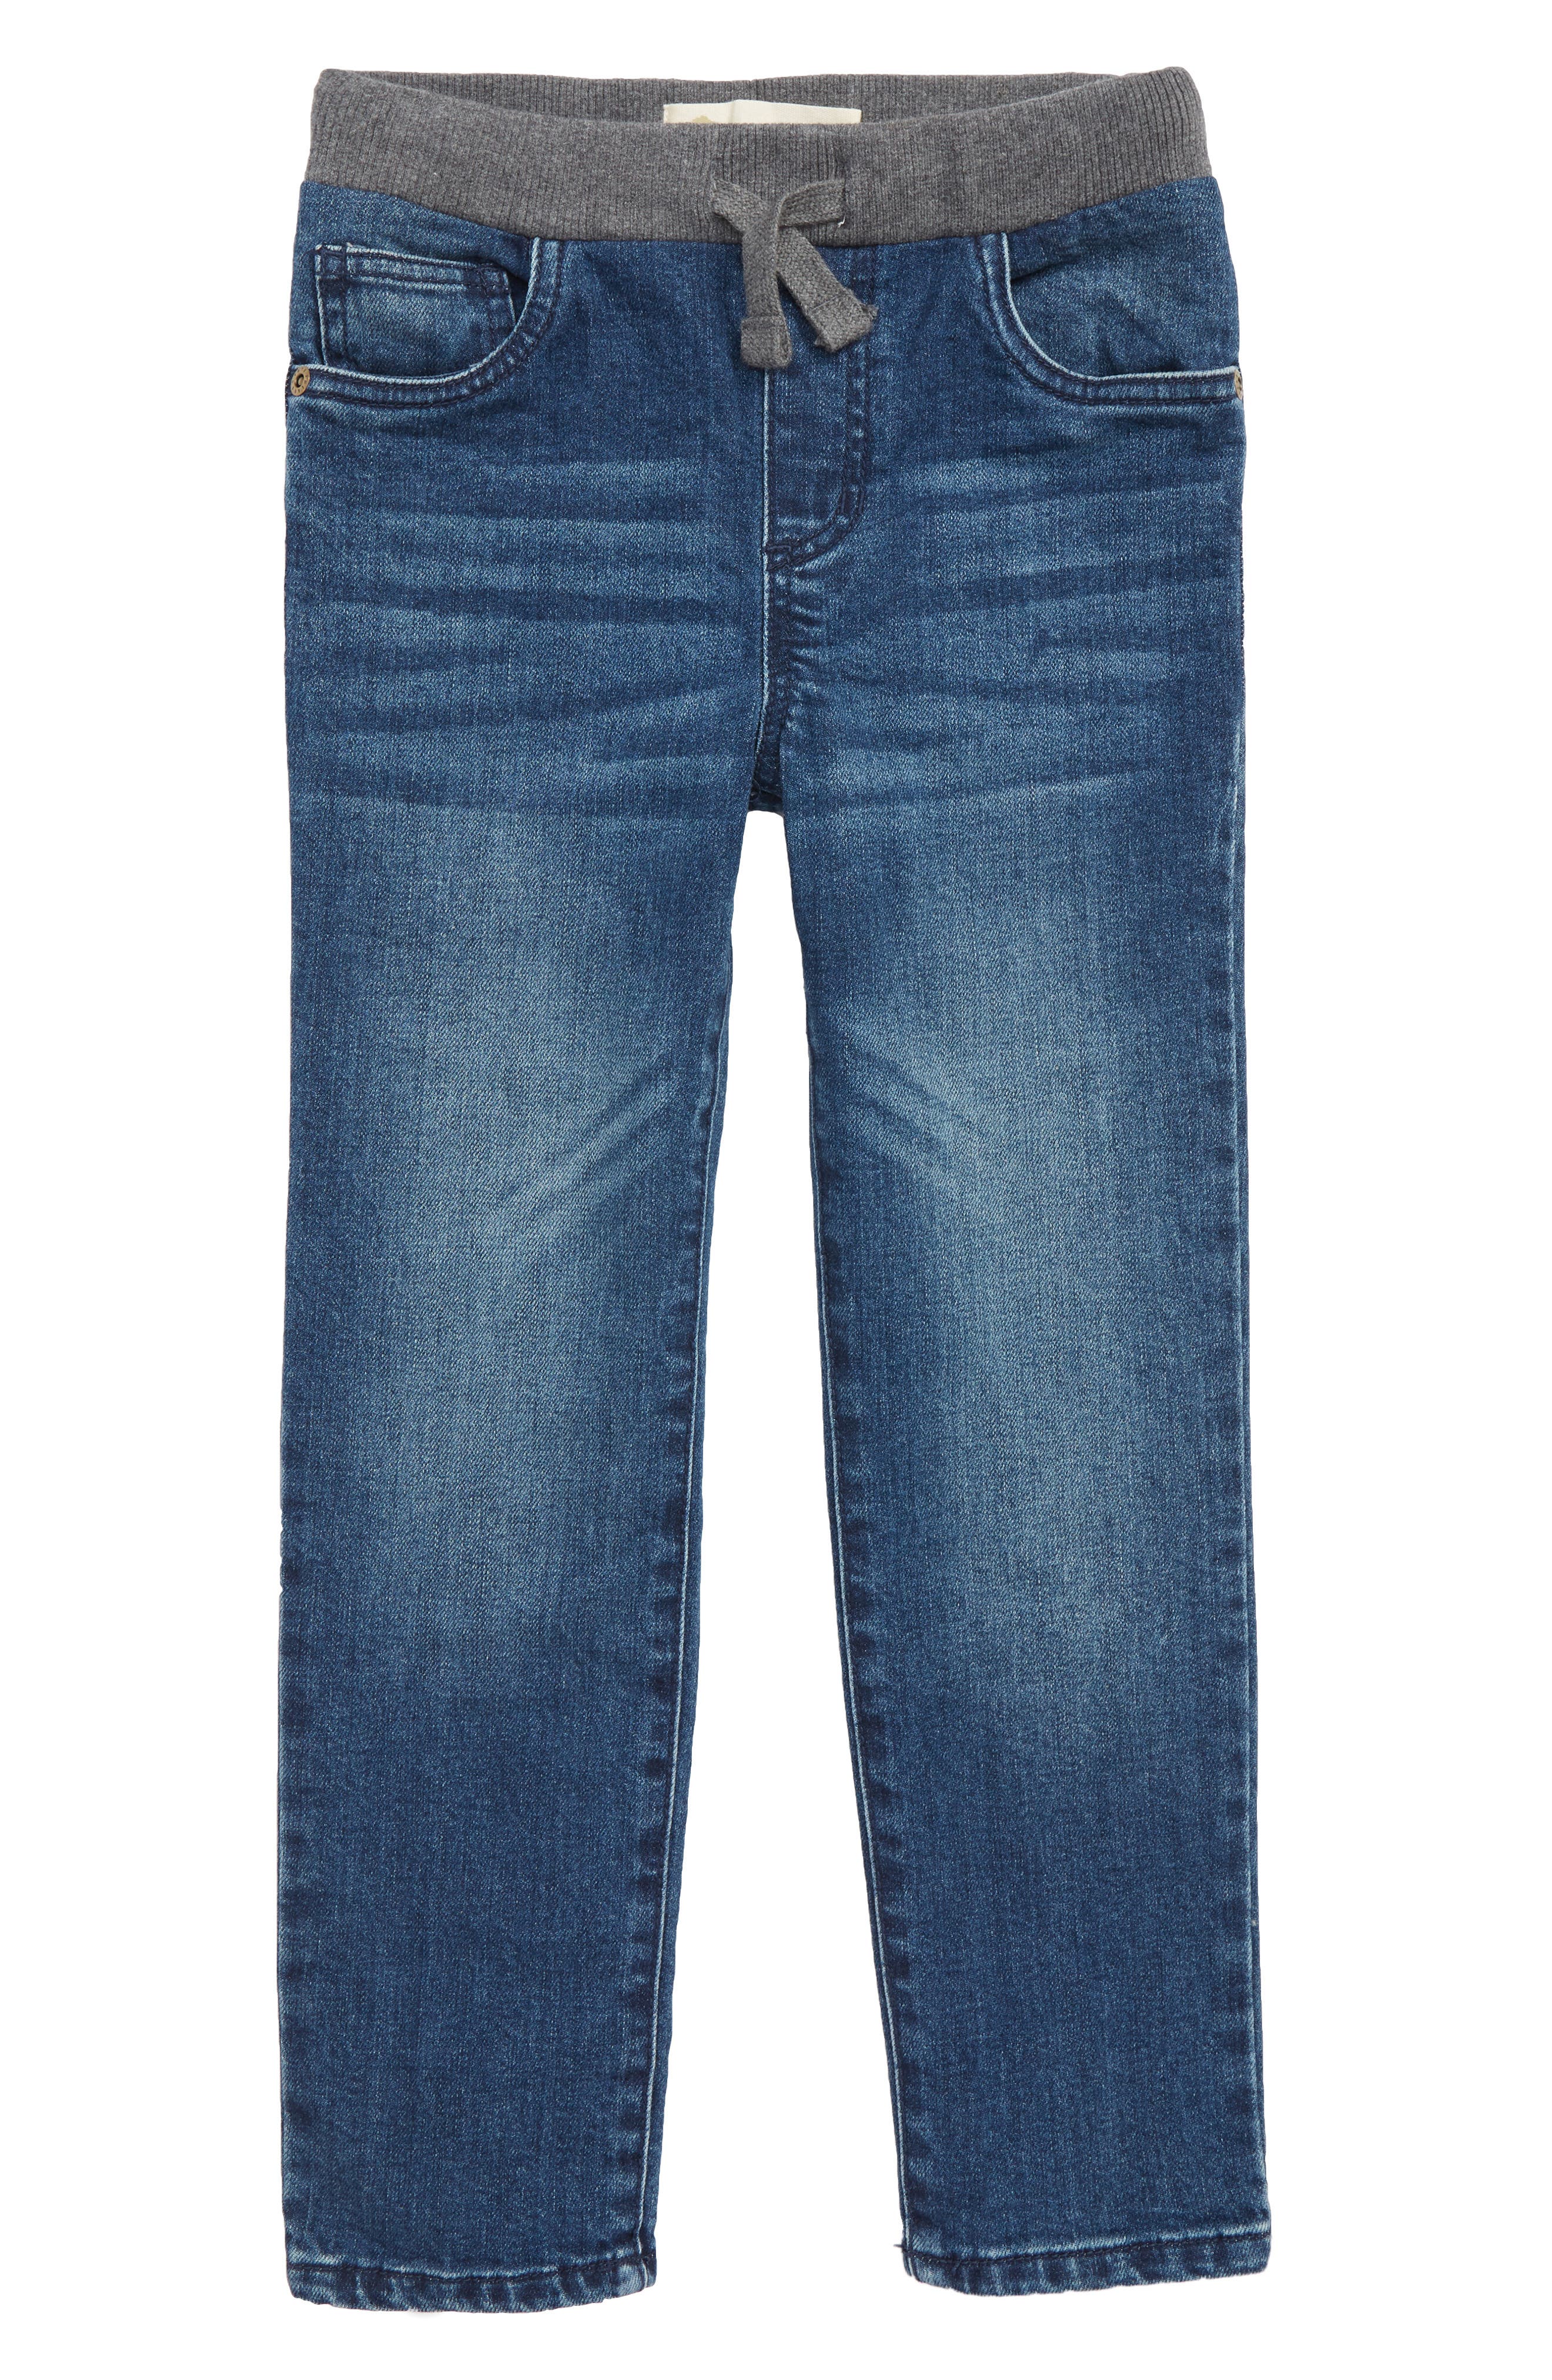 new model jeans for boys